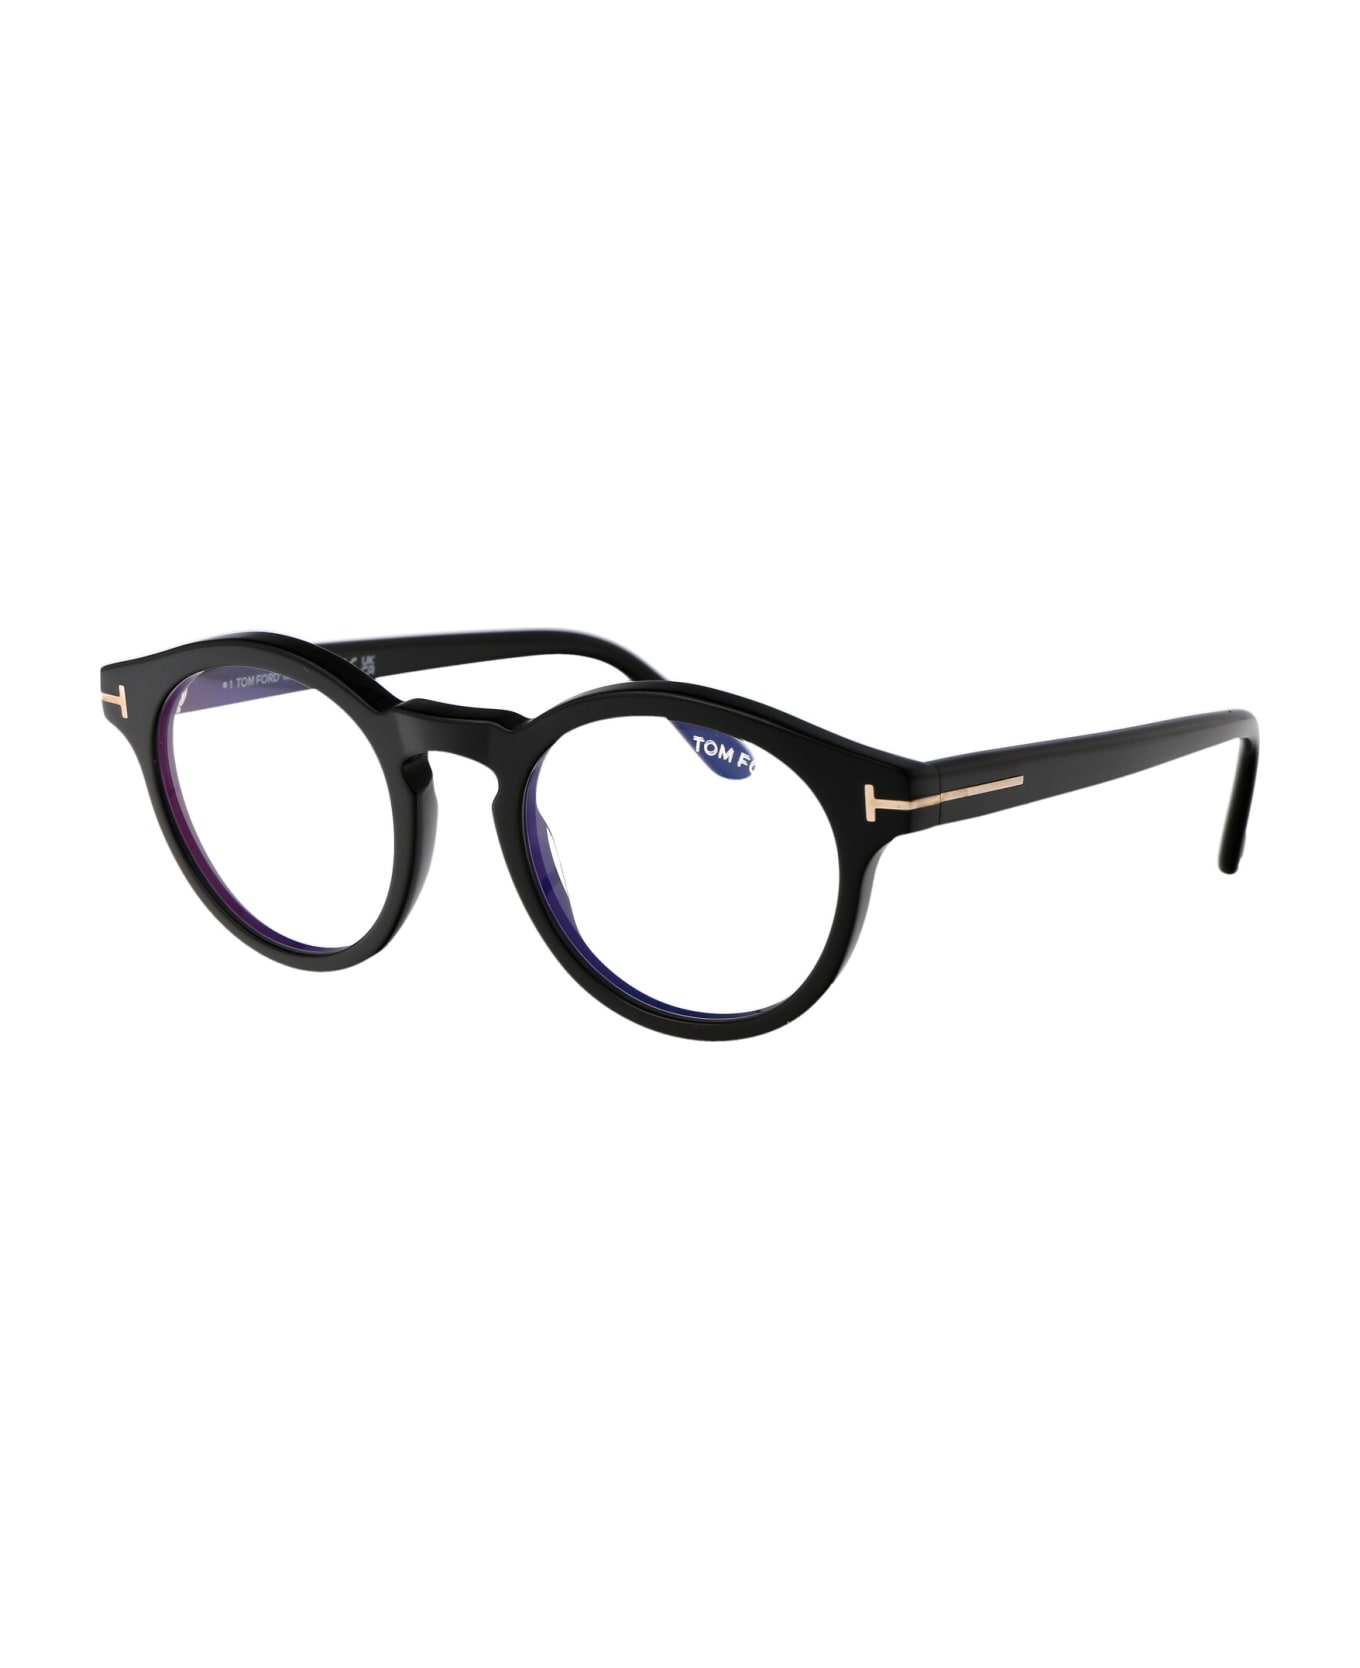 Tom Ford Eyewear Ft5887-b Glasses - 001 Nero Lucido アイウェア